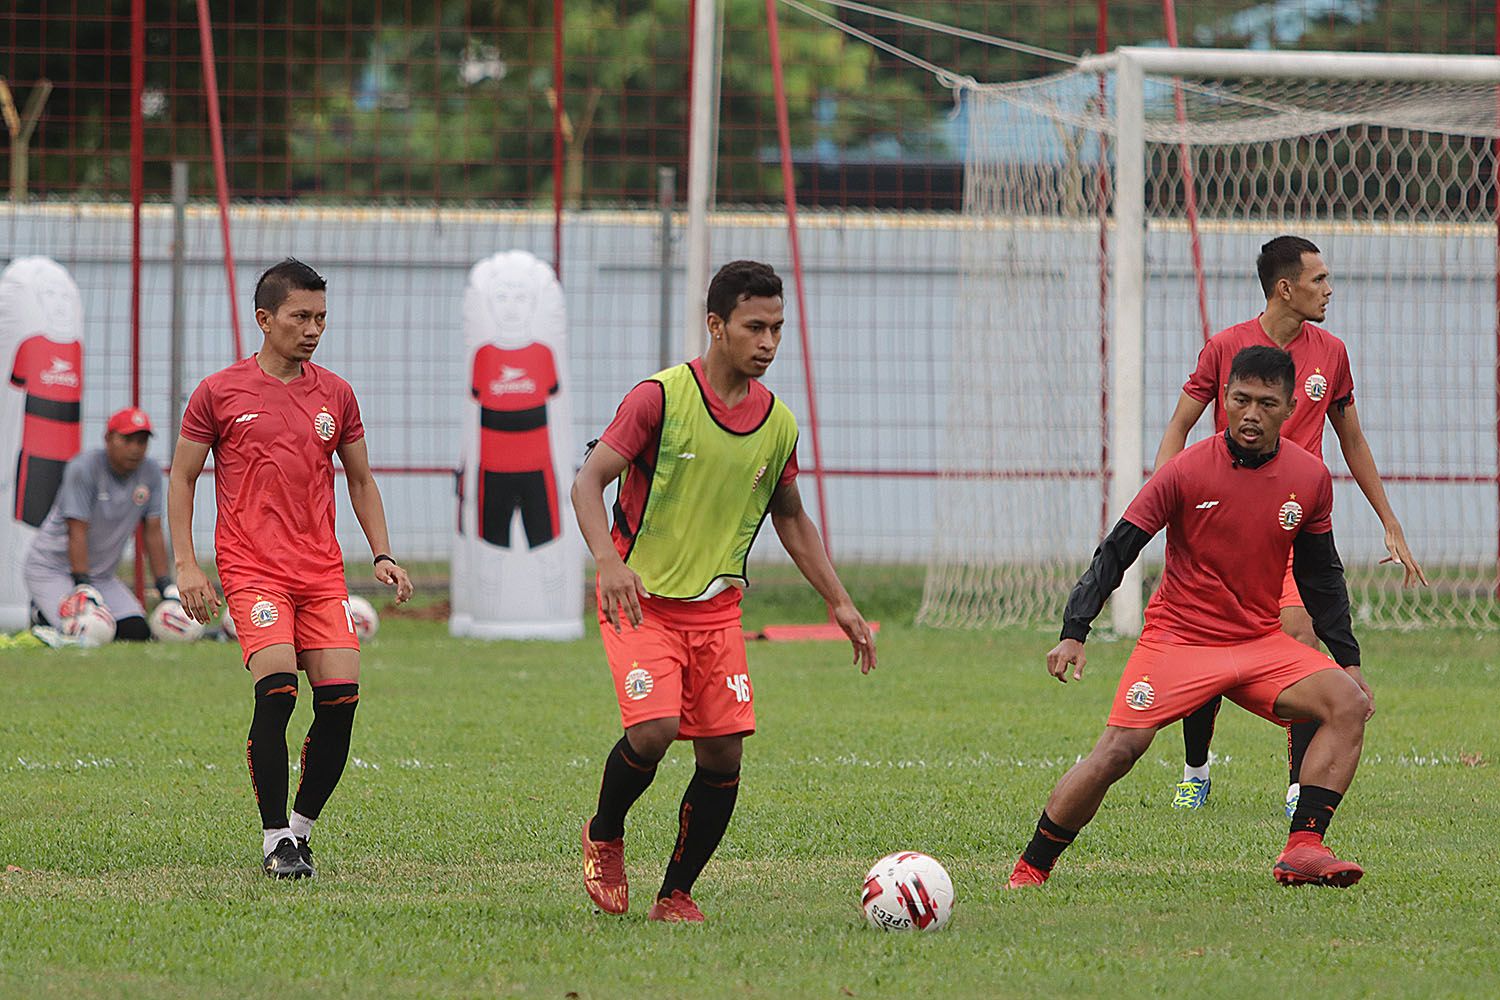 TIga pemain Persija, Ismed Sofyan, Osvaldo Haay, dan Tony Sucipto (dari kiri ke kanan) saat menjalani sesi latihan tim di Lapangan PS AU TNI AU, Halim, pada Januari 2020.